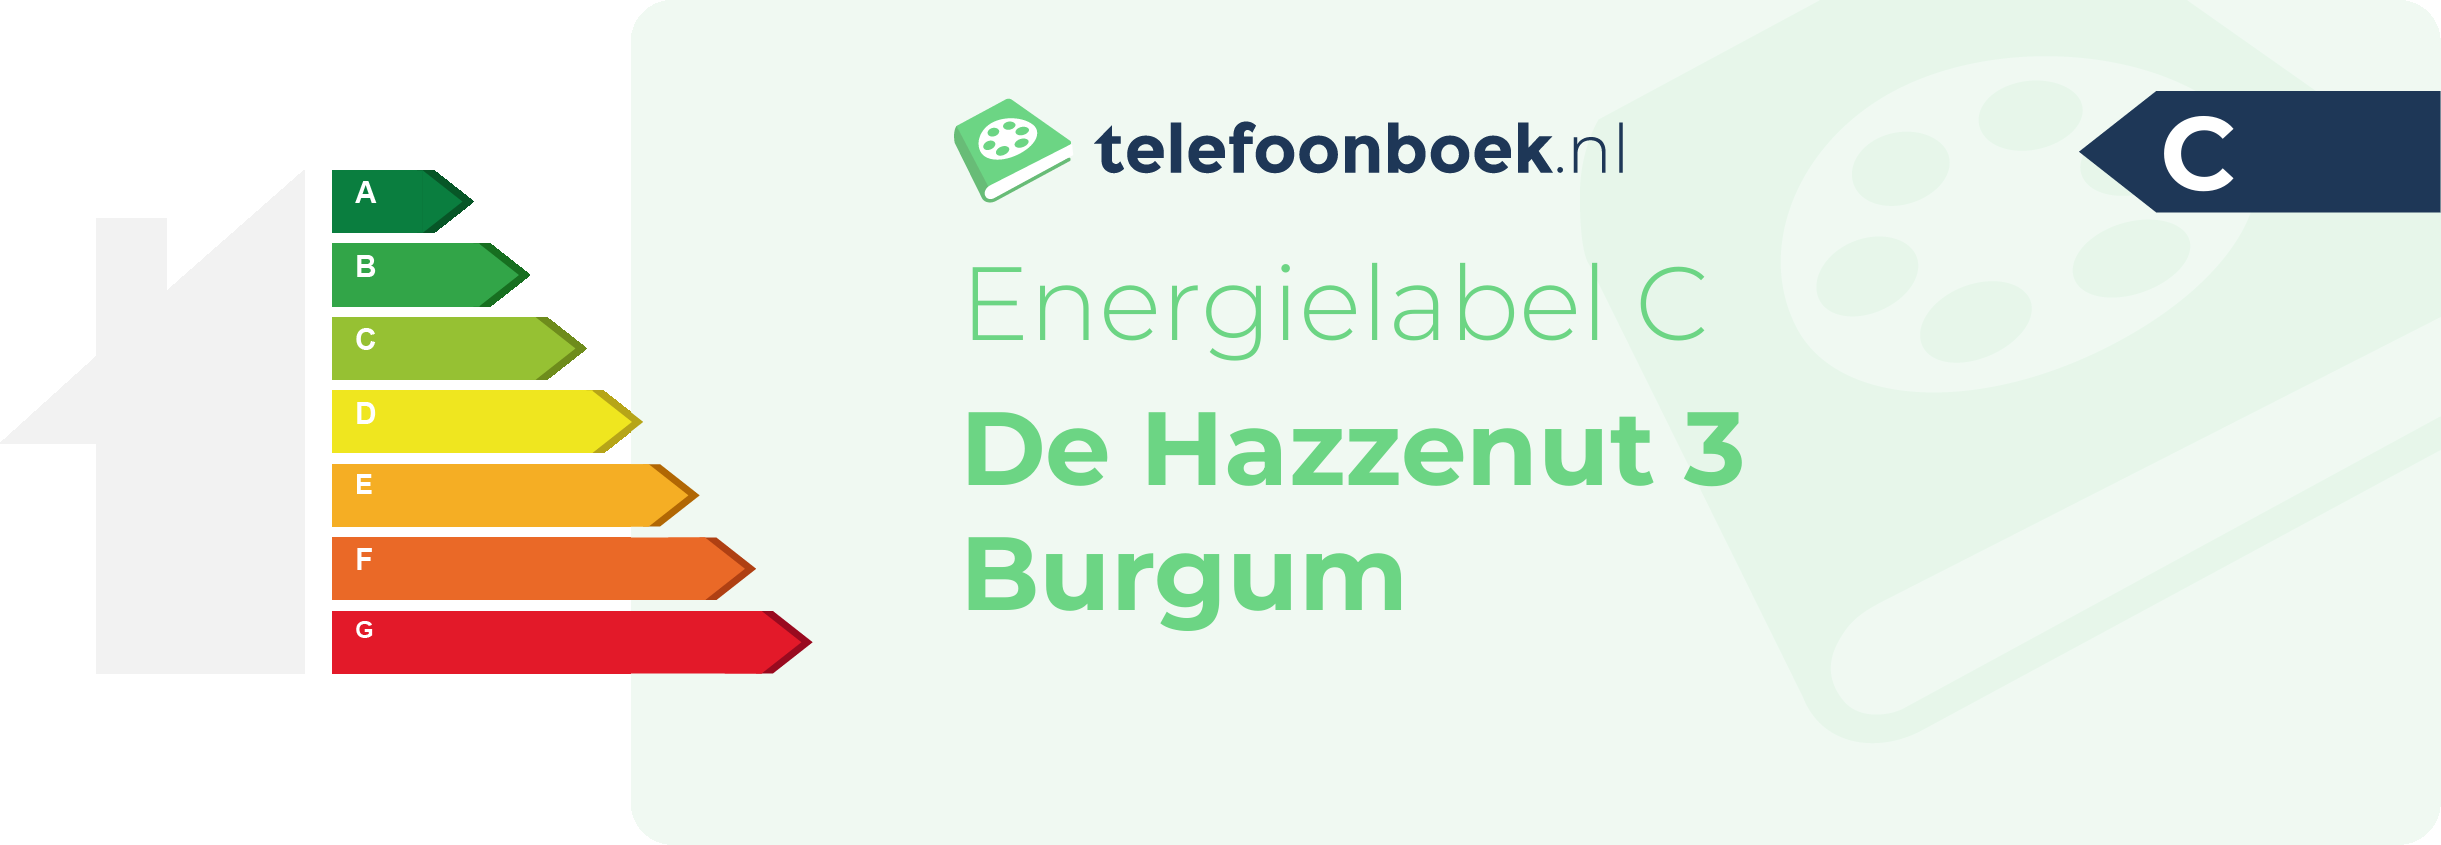 Energielabel De Hazzenut 3 Burgum